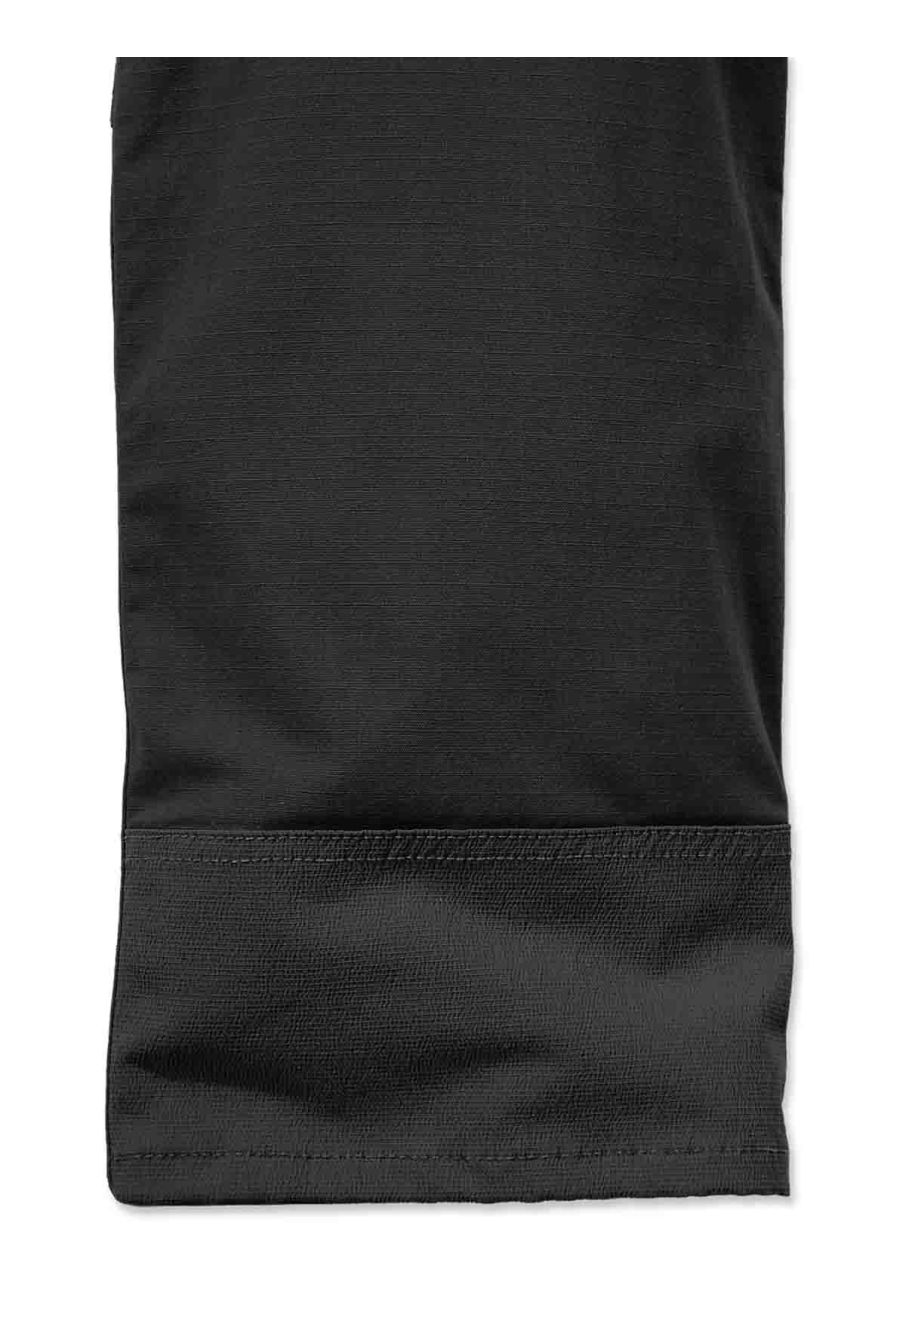 103337 Work Trouser Steel Double-Front Multi-Pocket Carhartt Black 001